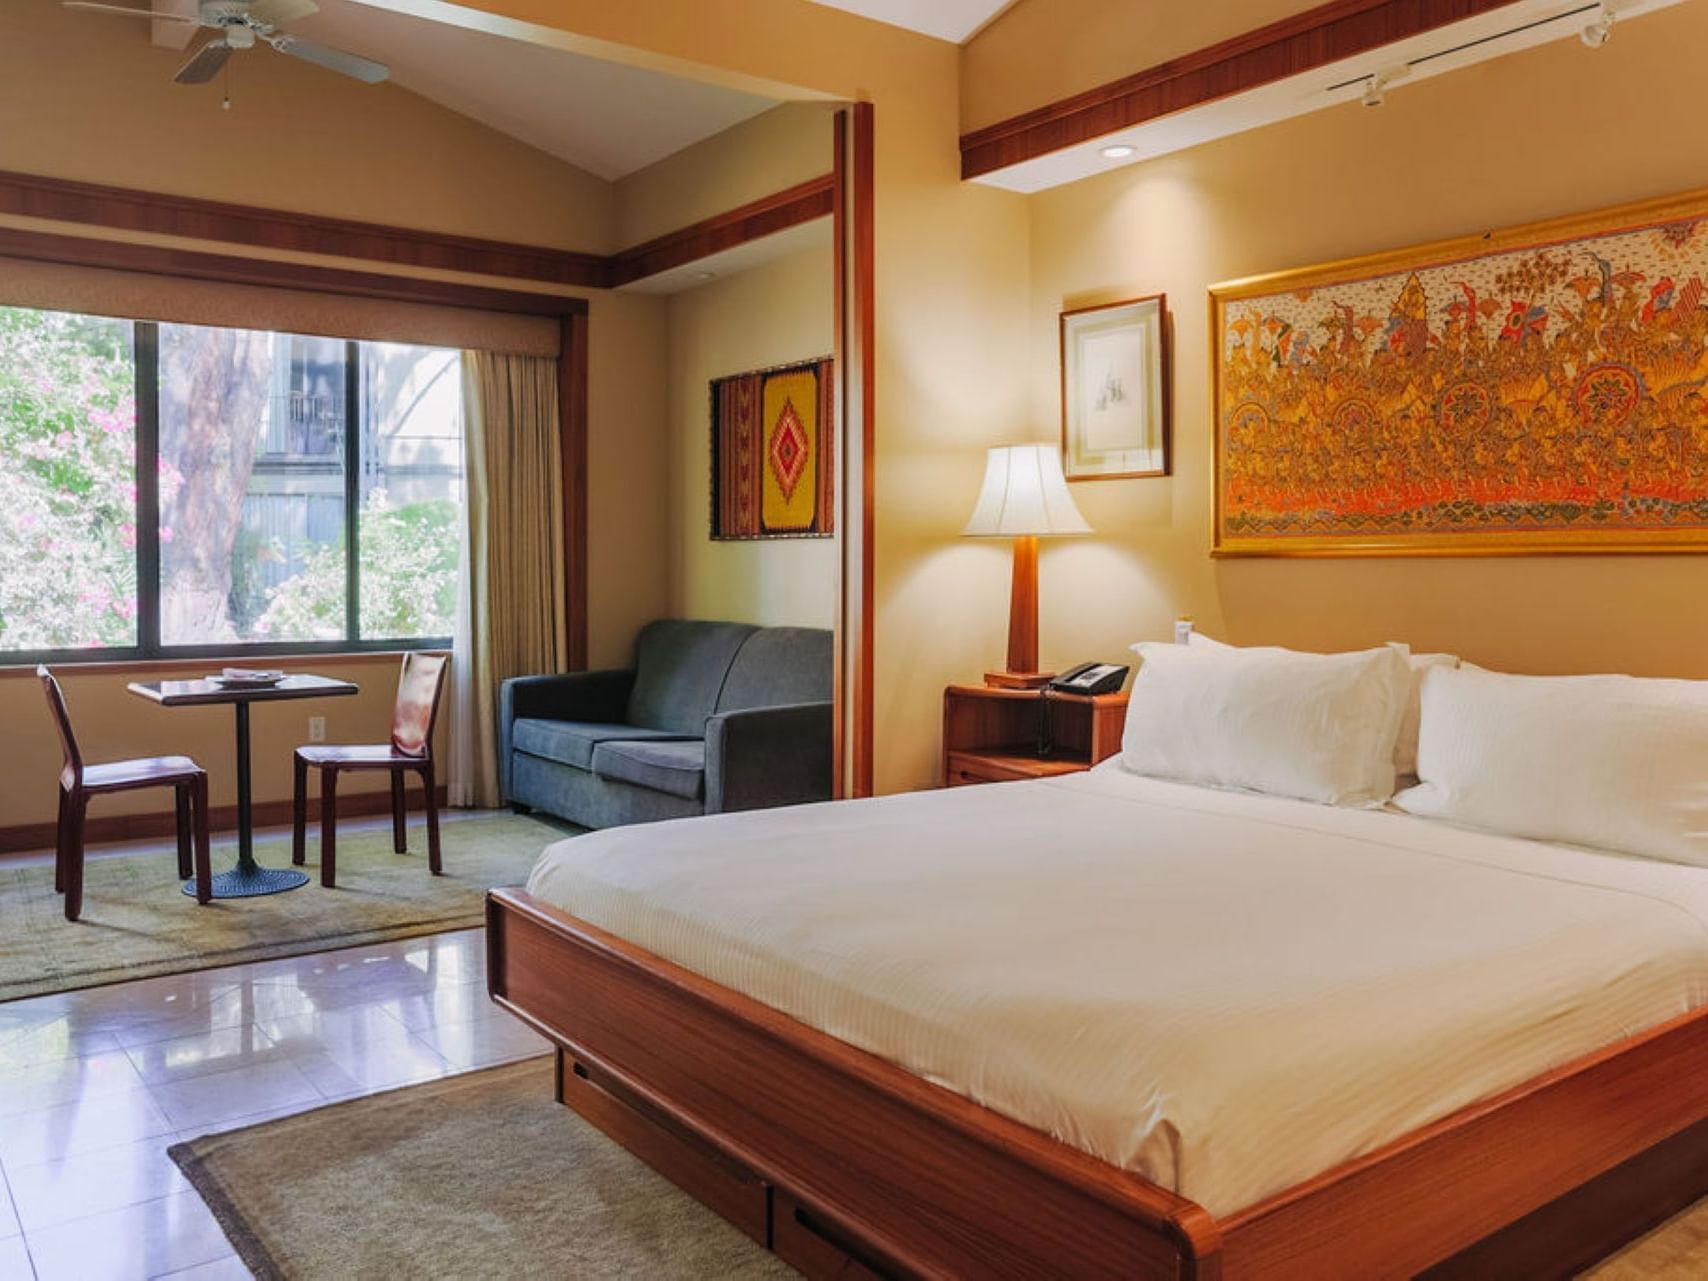 Large bed & lounge in Lanai Suite at Dinah's Garden Hotel